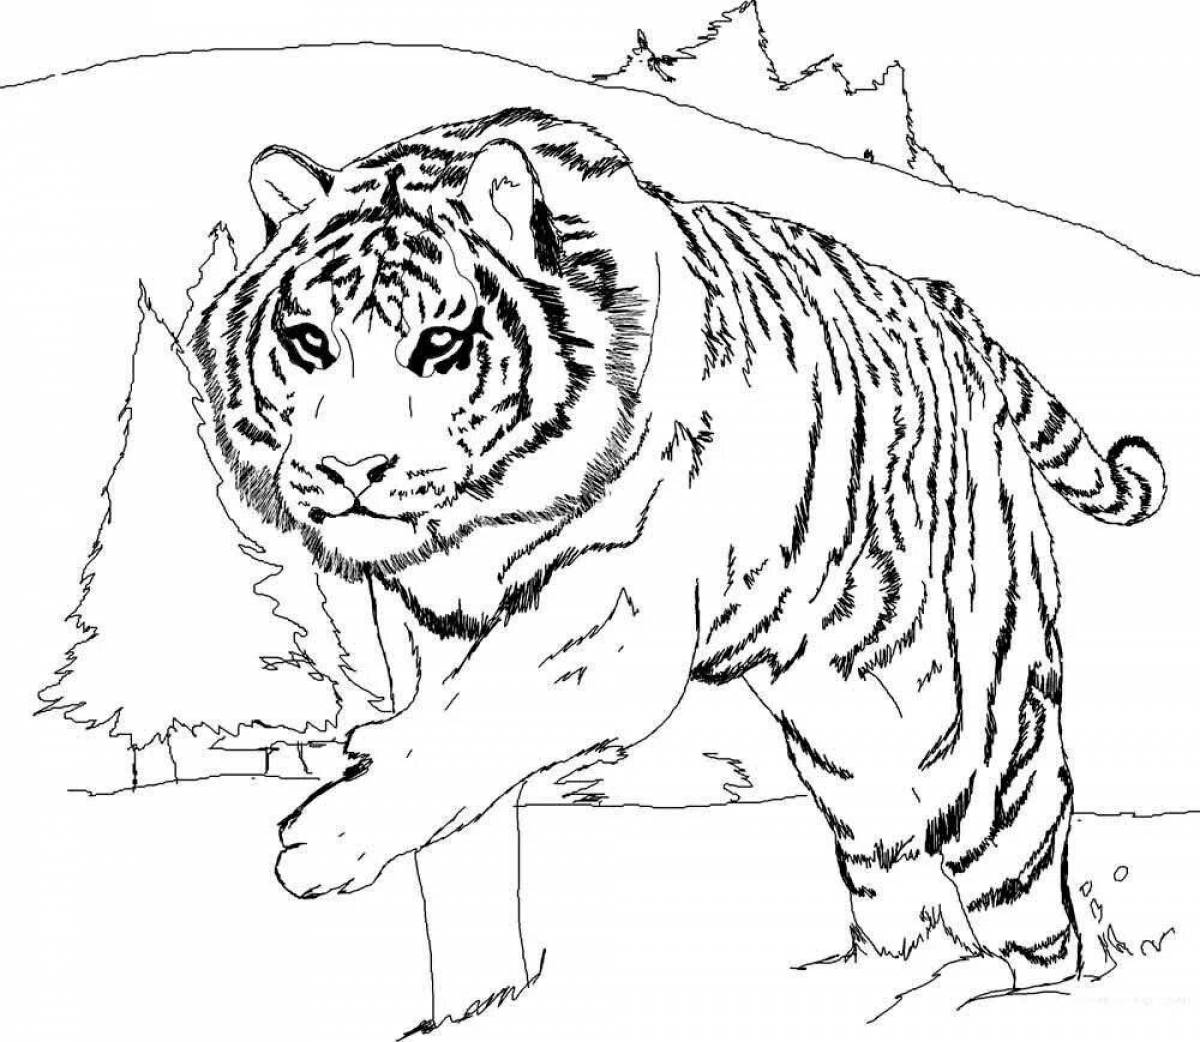 Exquisite tiger pattern